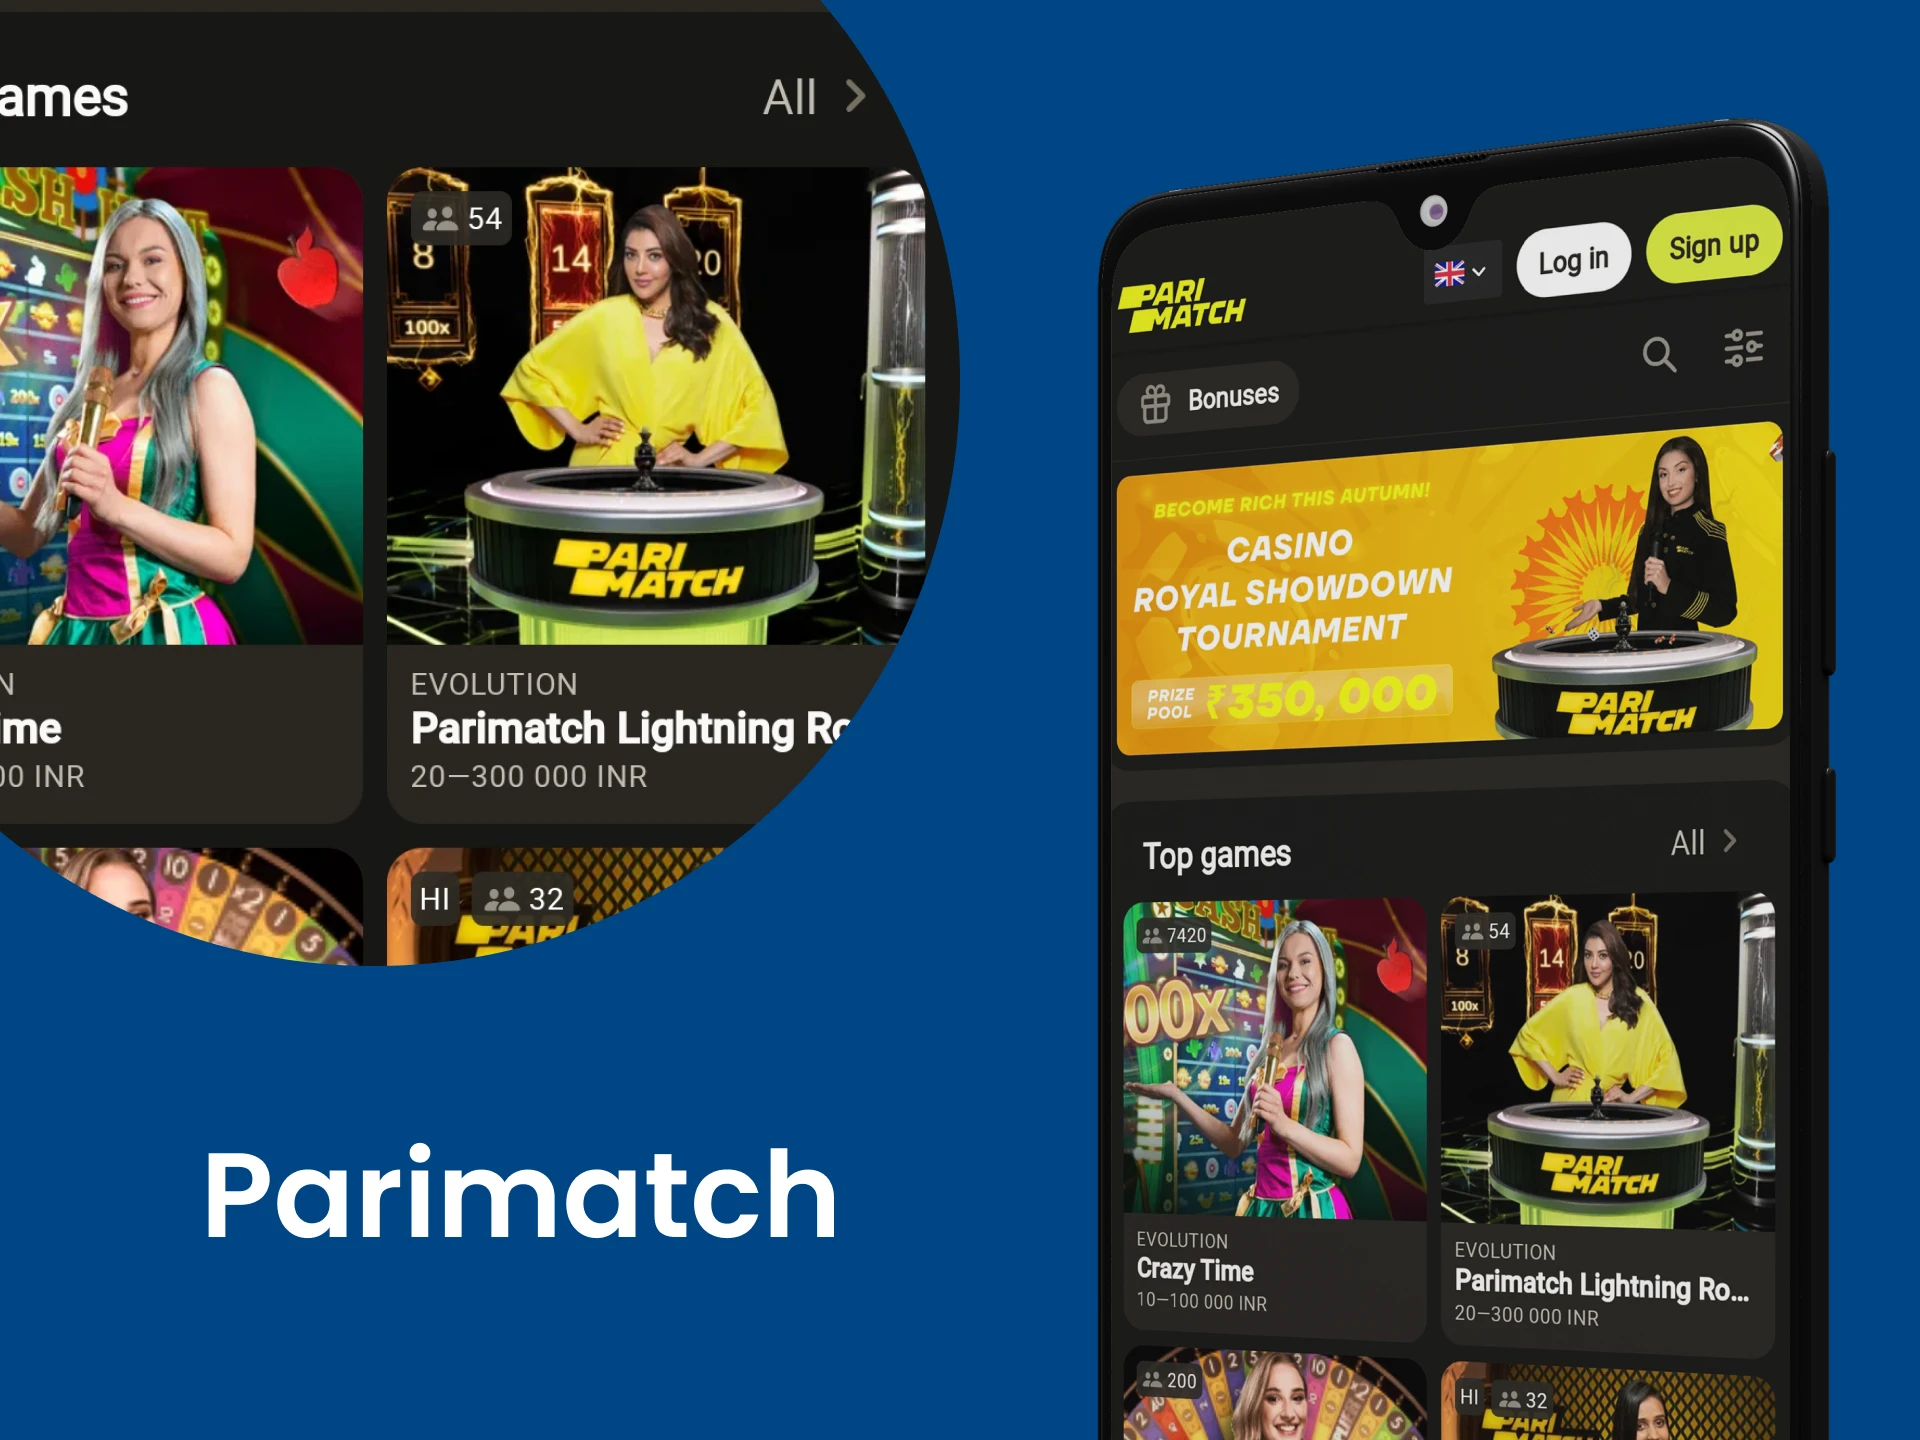 For casino games, choose Parimatch.